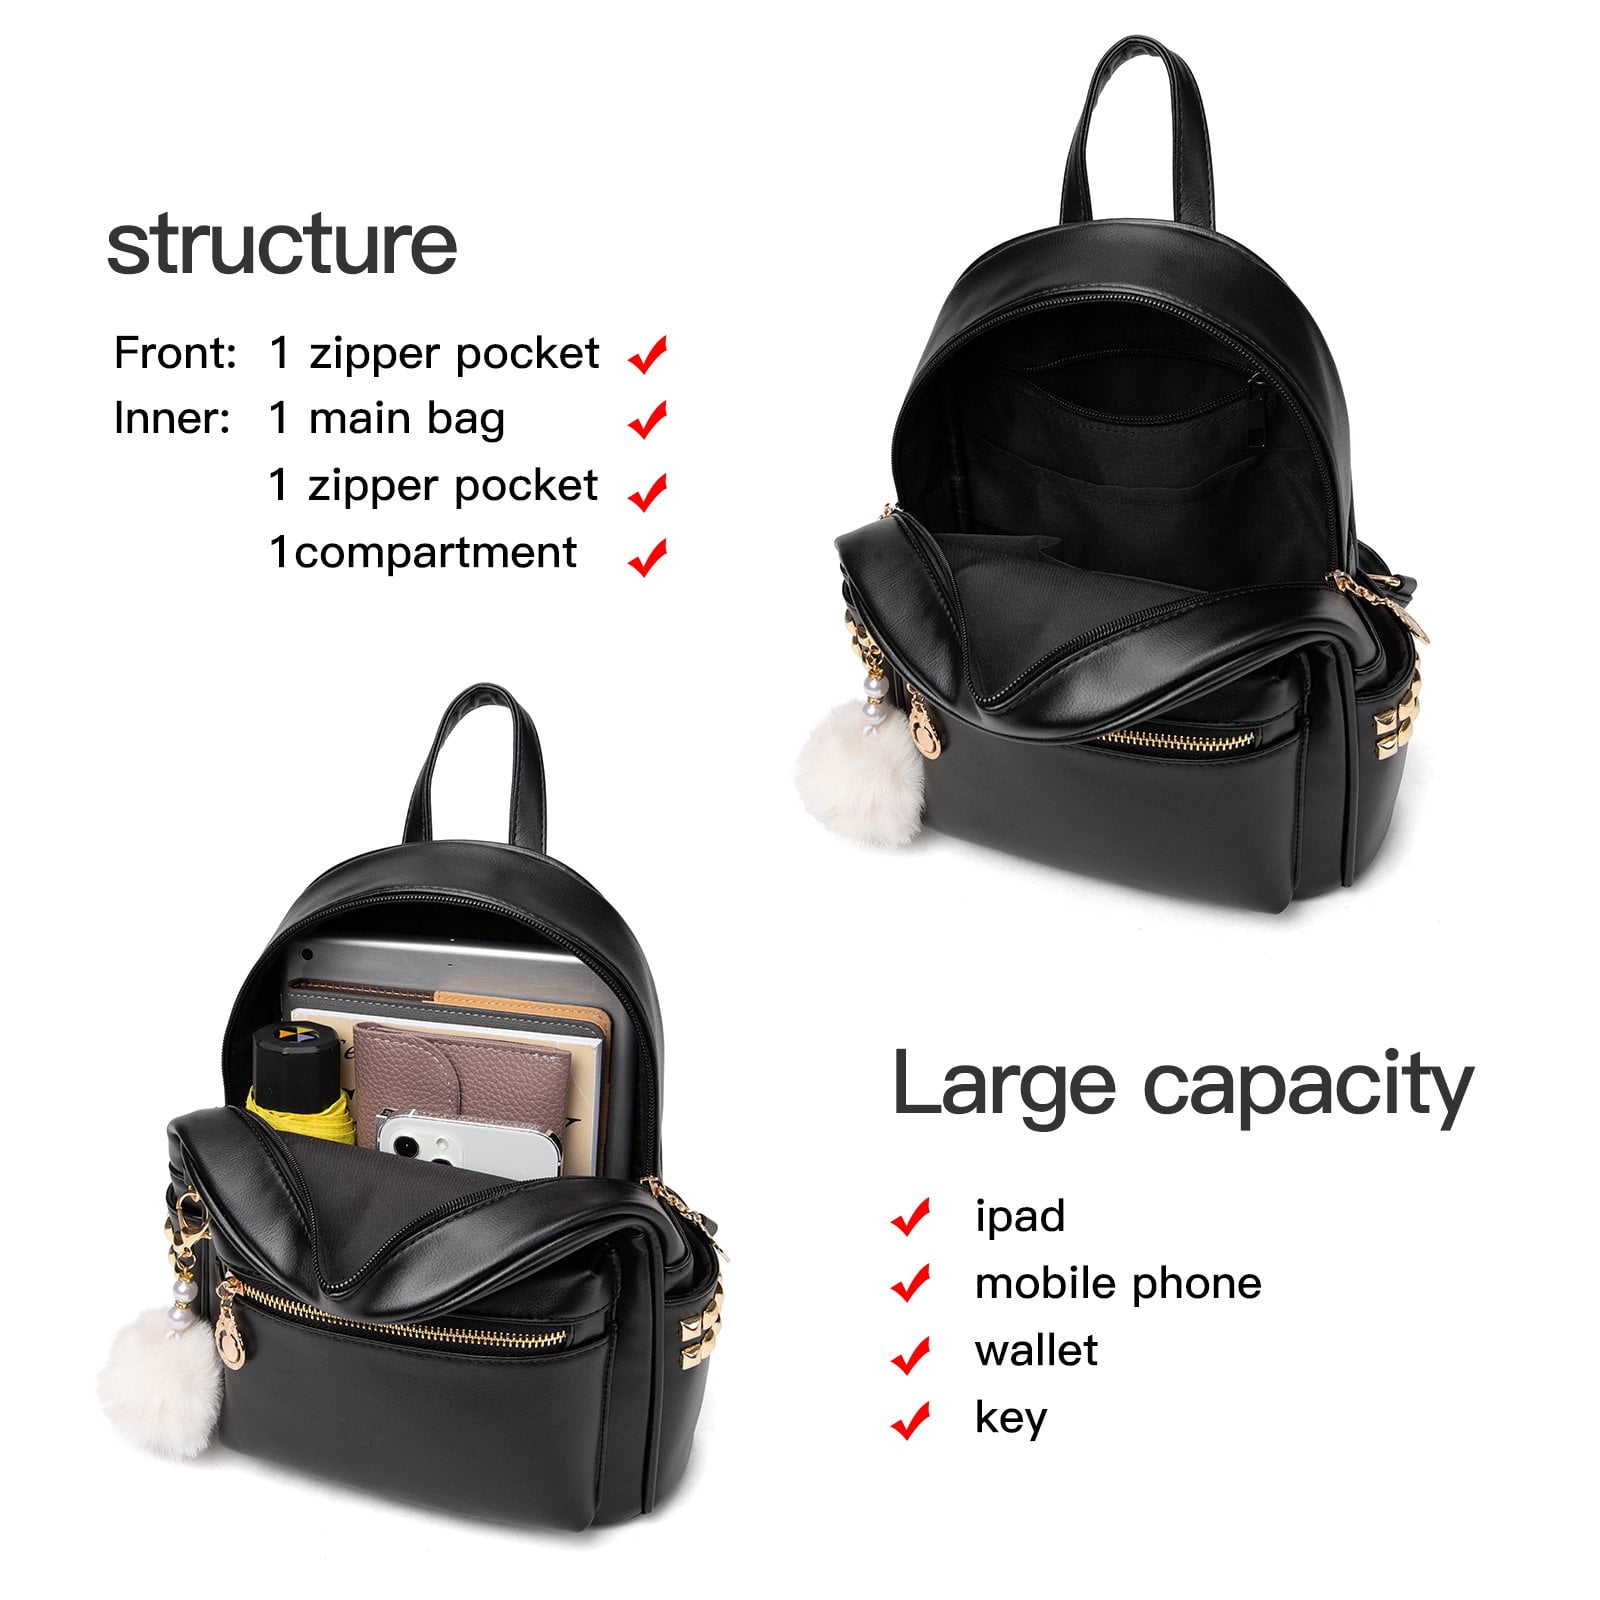 Cheruty Mini Backpack Women Leather Small Backpack Purse for Teen Girl  Travel Backpack Cute School Bookbags Ladies Satchel Bags Gray